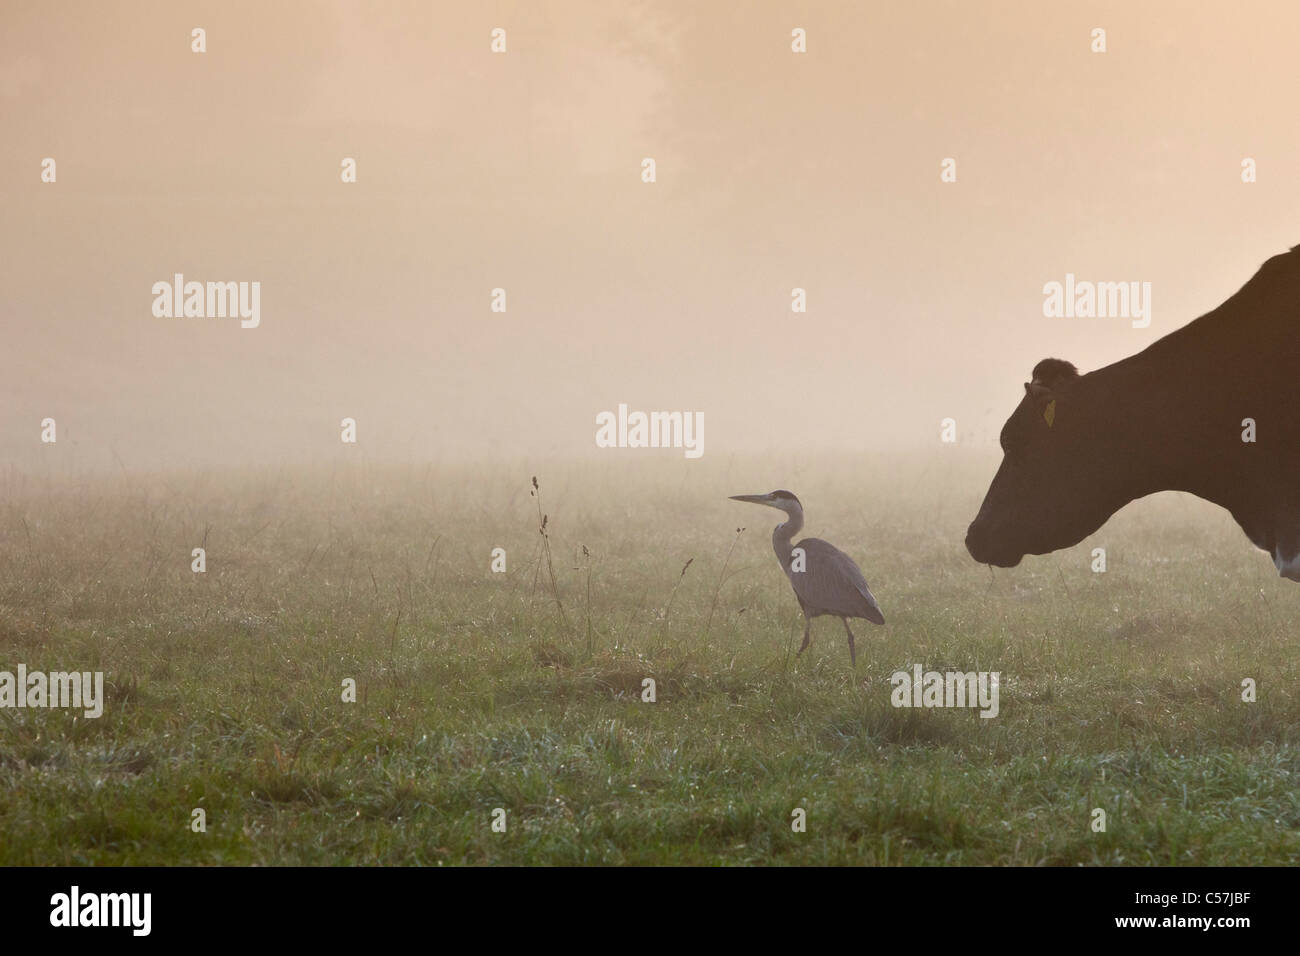 The Netherlands, Breukelen, Cow chasing Grey heron in morning mist. Stock Photo